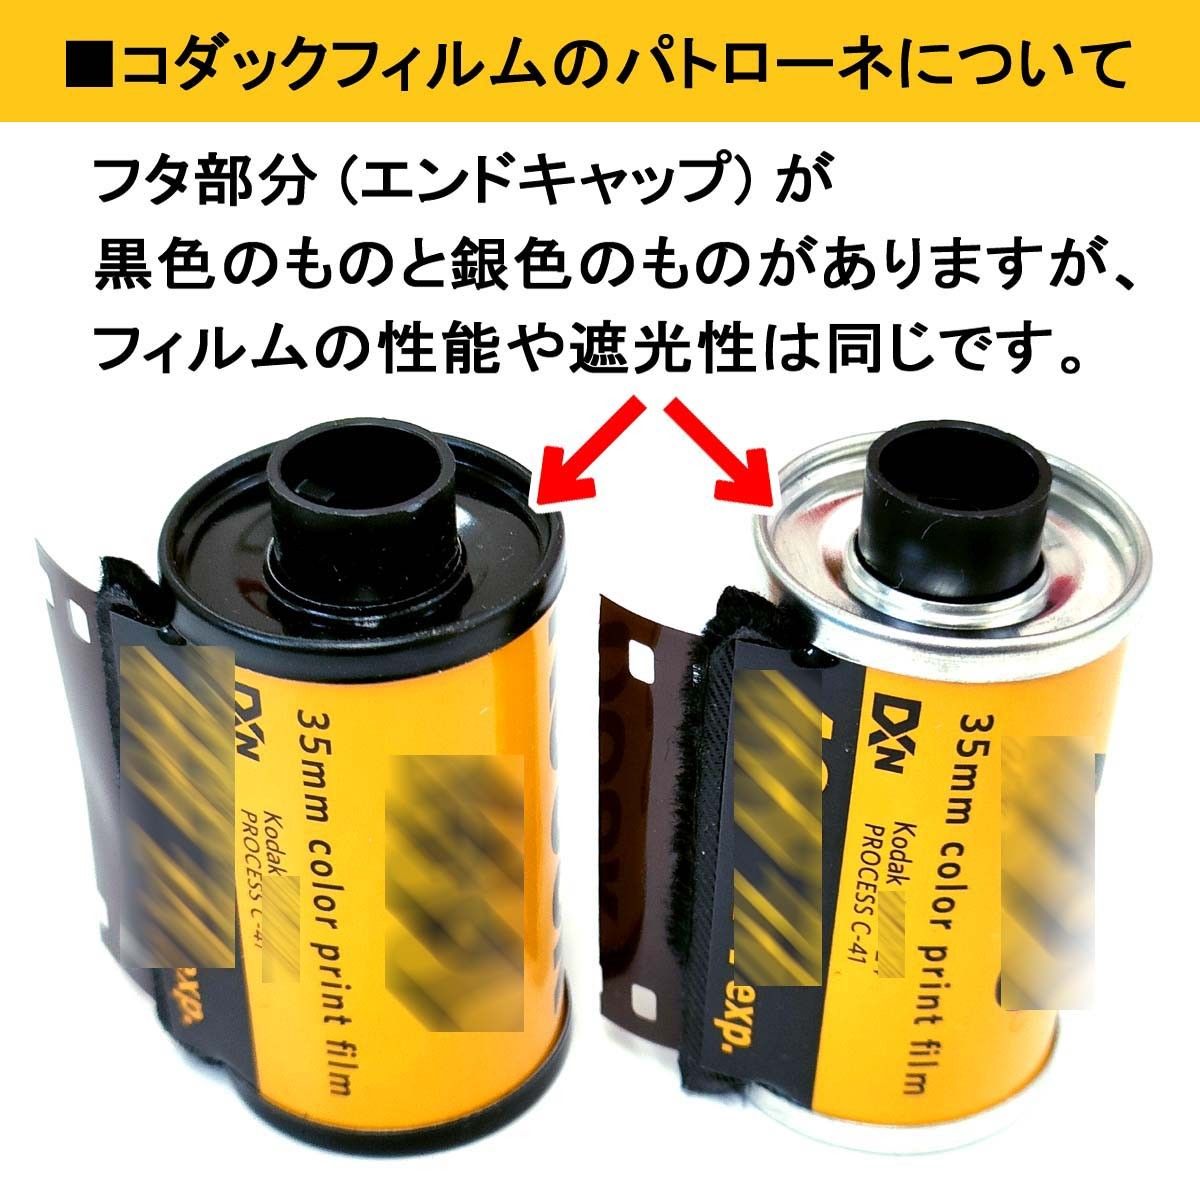 ULTRA MAX 400-36枚撮【1本】Kodak カラーネガフィルム 135/35mm コダック 0086806034067